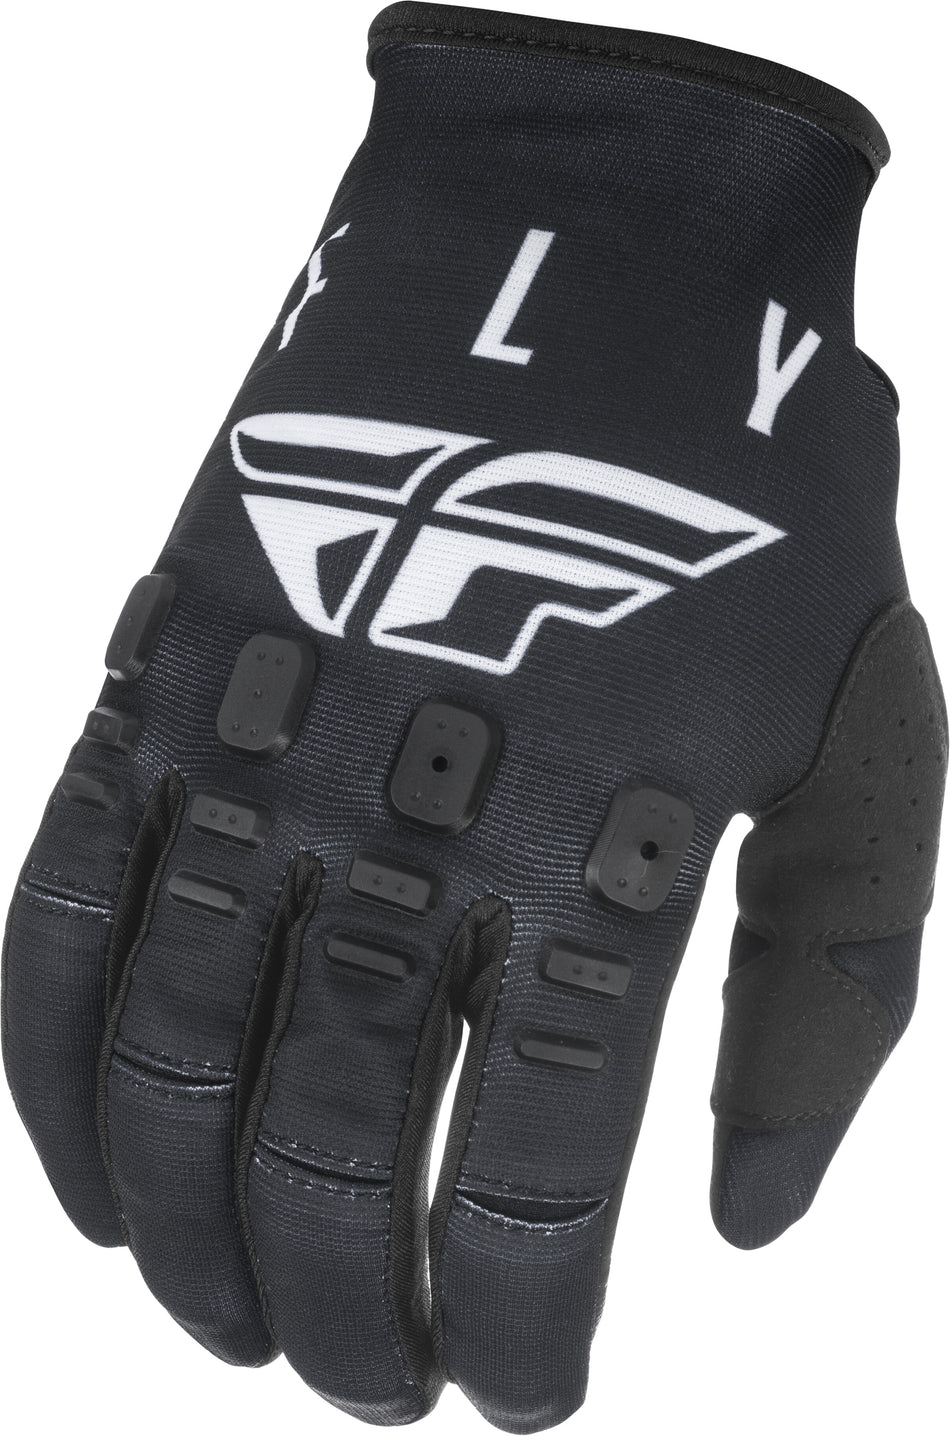 FLY RACING Kinetic K121 Gloves Black/White Sz 07 374-41007